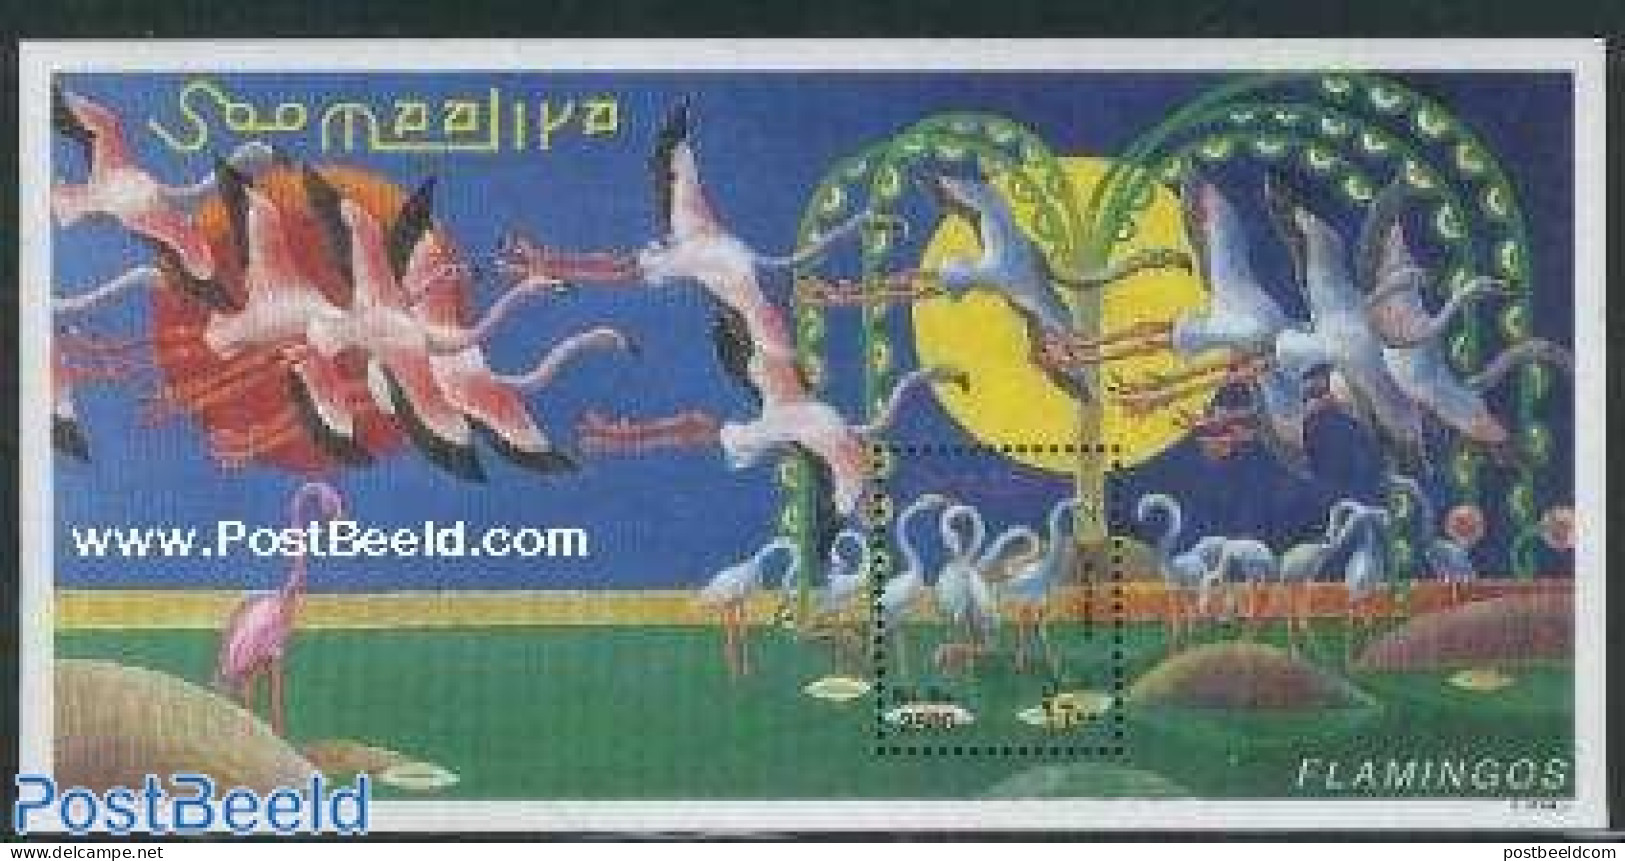 Somalia 1998 Flamingo S/s, Mint NH, Nature - Birds - Somalia (1960-...)